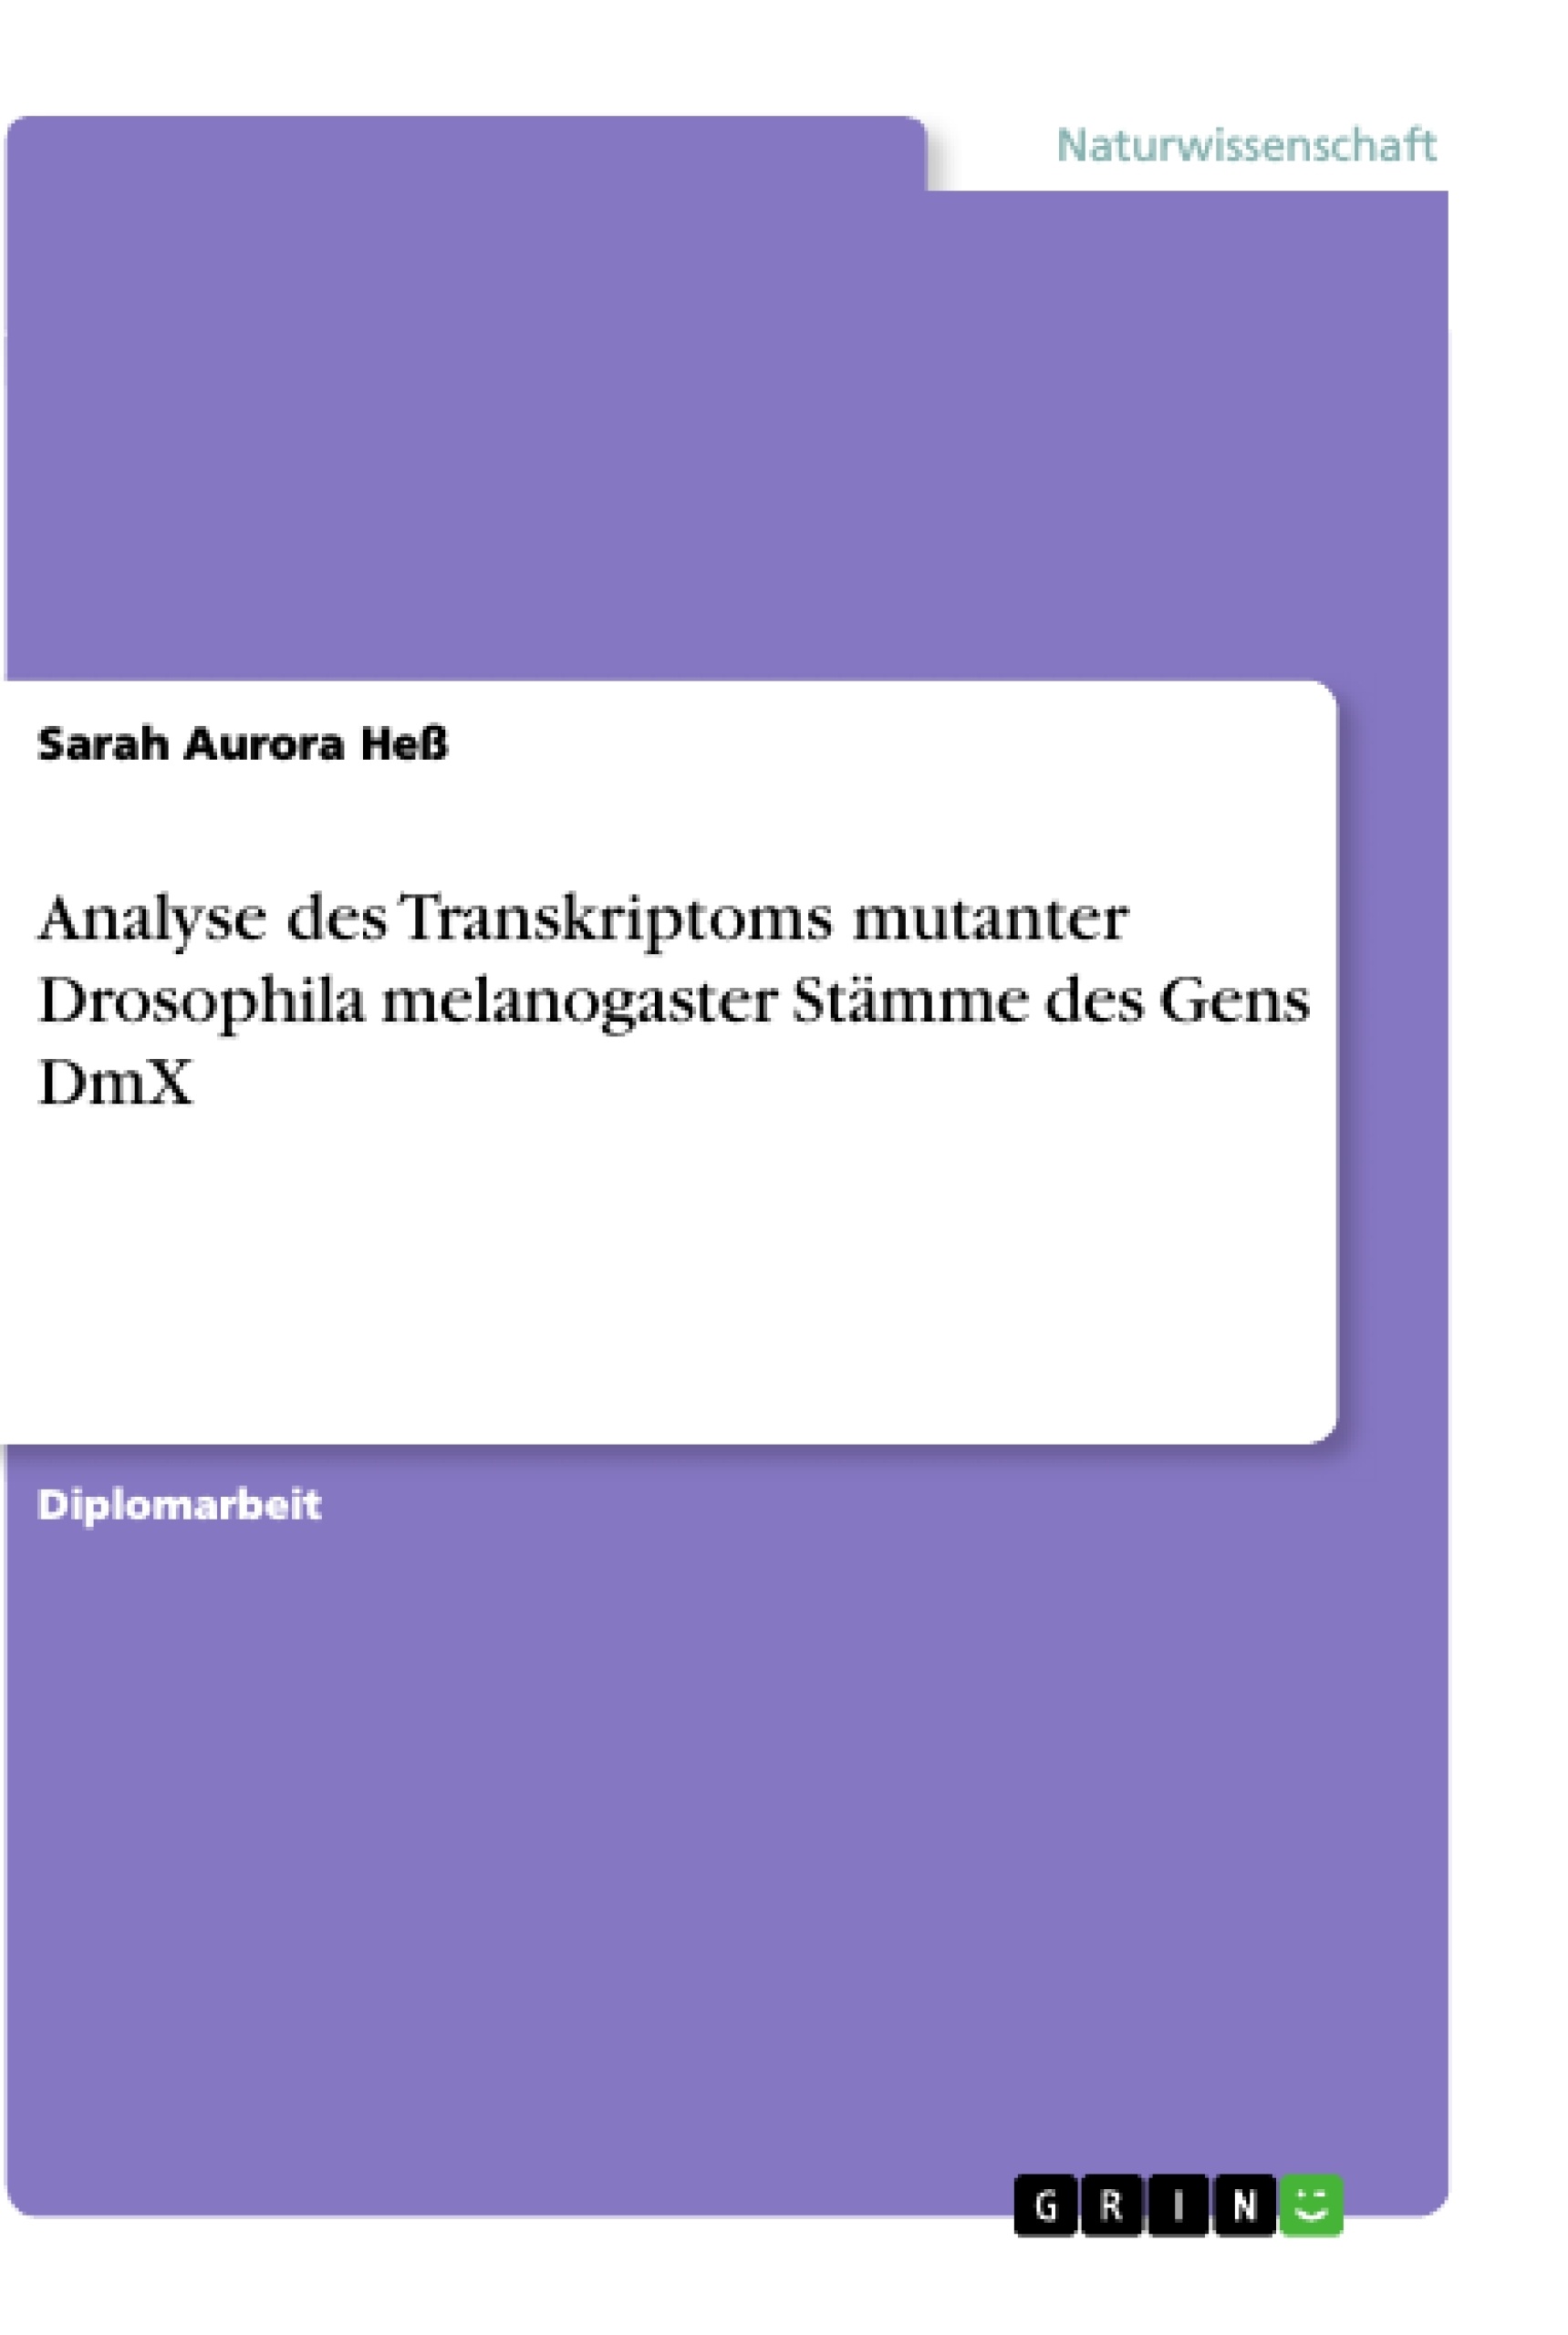 Title: Analyse des Transkriptoms mutanter Drosophila melanogaster Stämme des Gens DmX